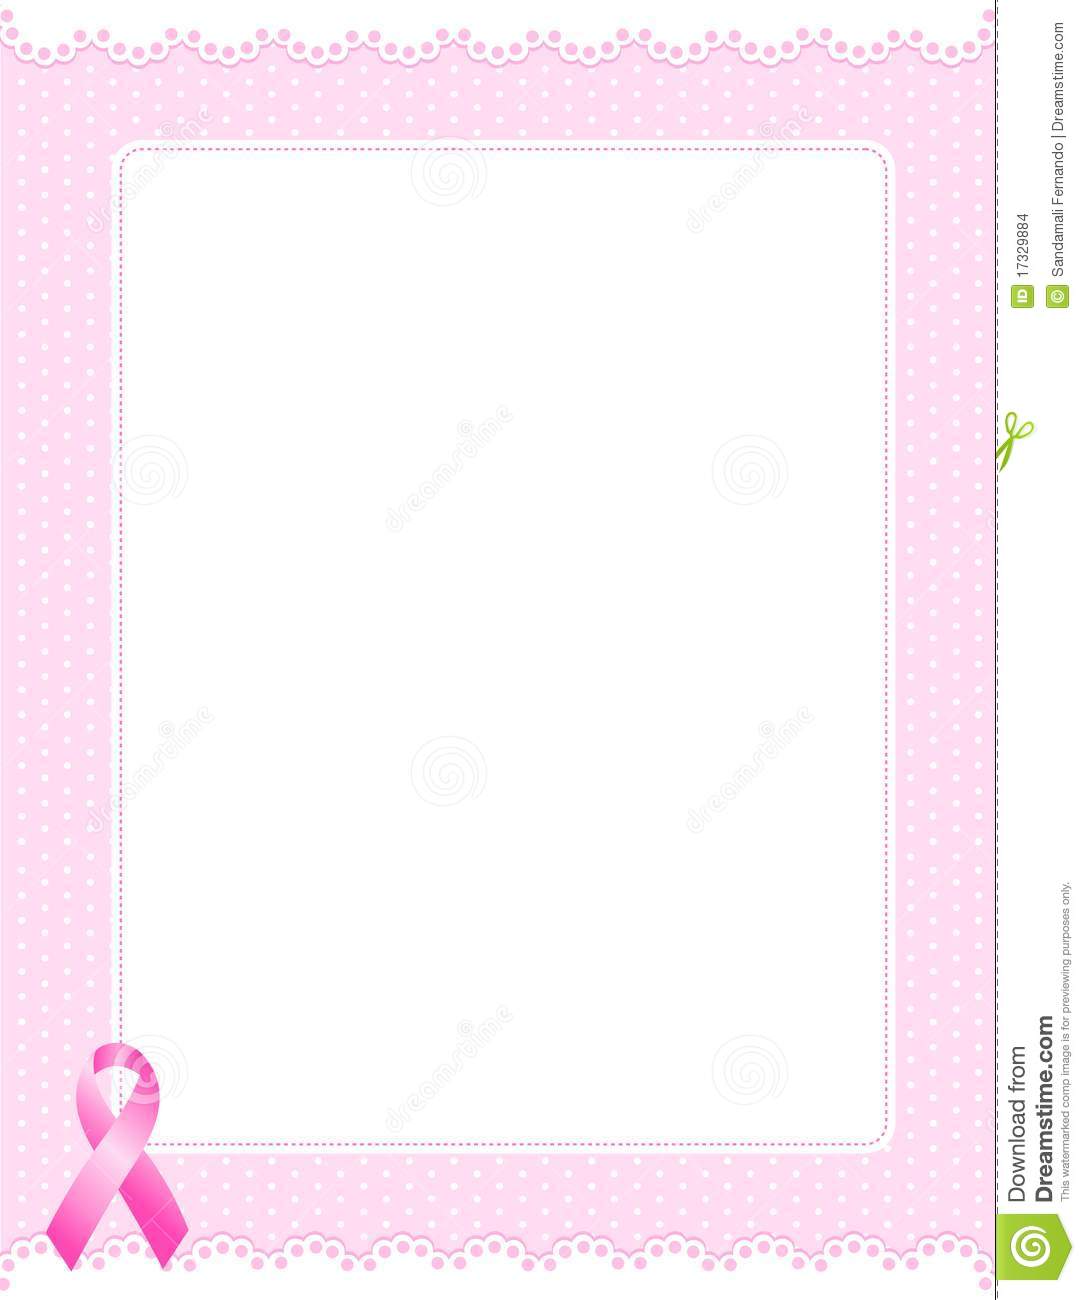 Cancer Awareness Ribbons Background   Border  Cute Pink Ribbons Frame